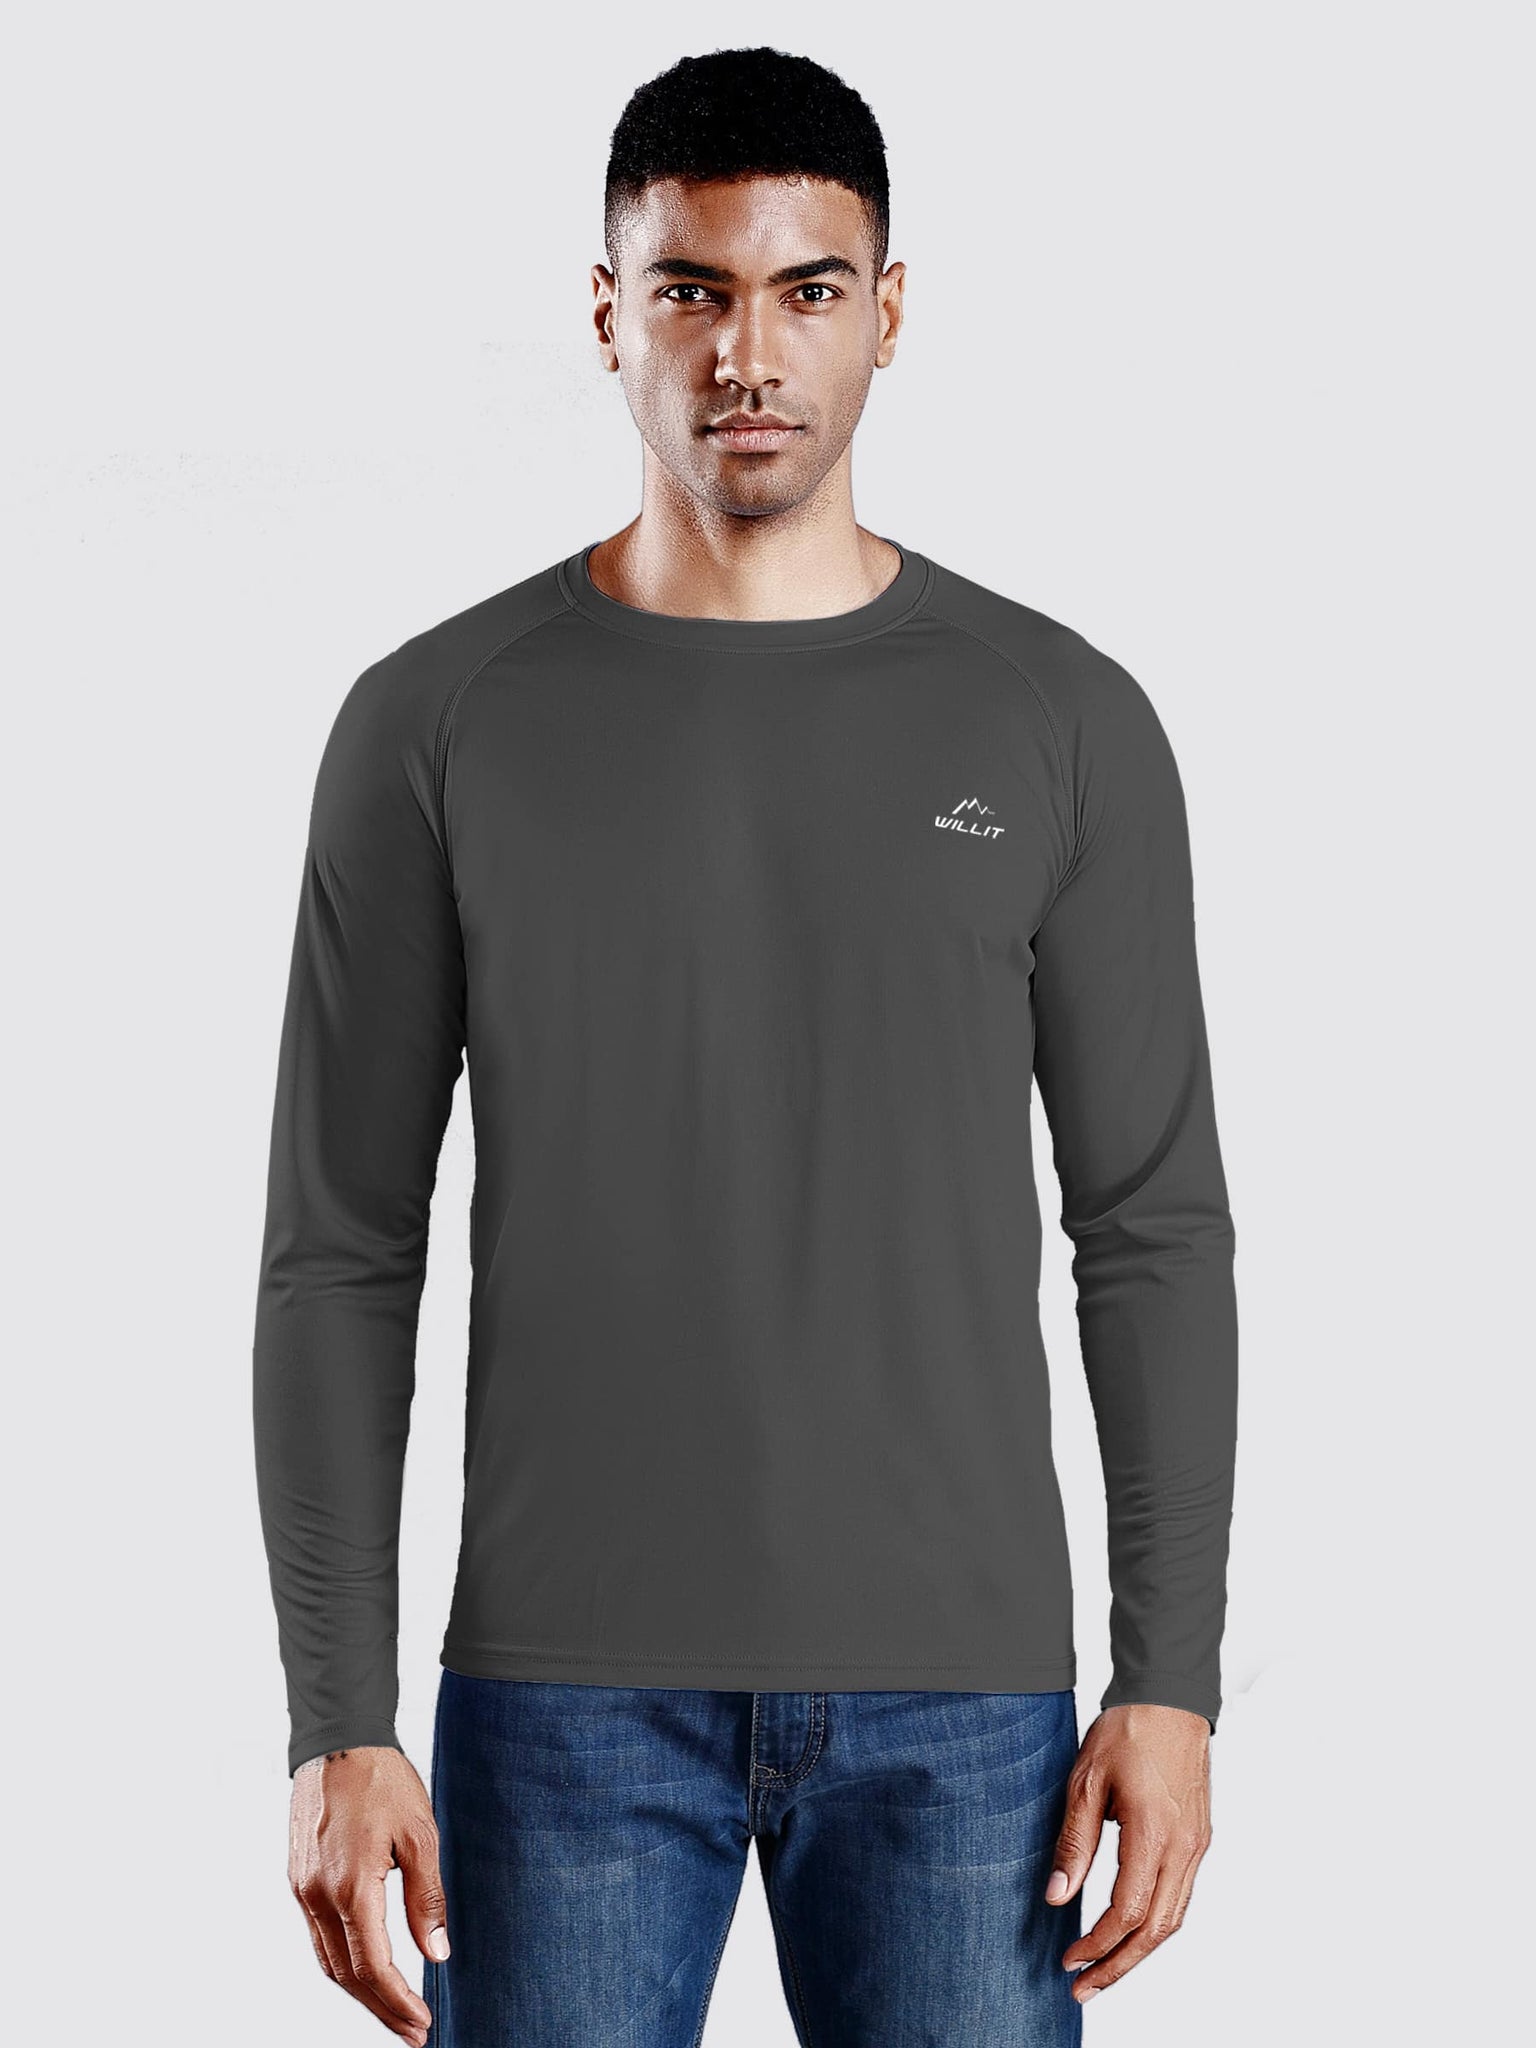 Willit Men's Sun Protection Long Sleeve Shirts_DeepGray_model4